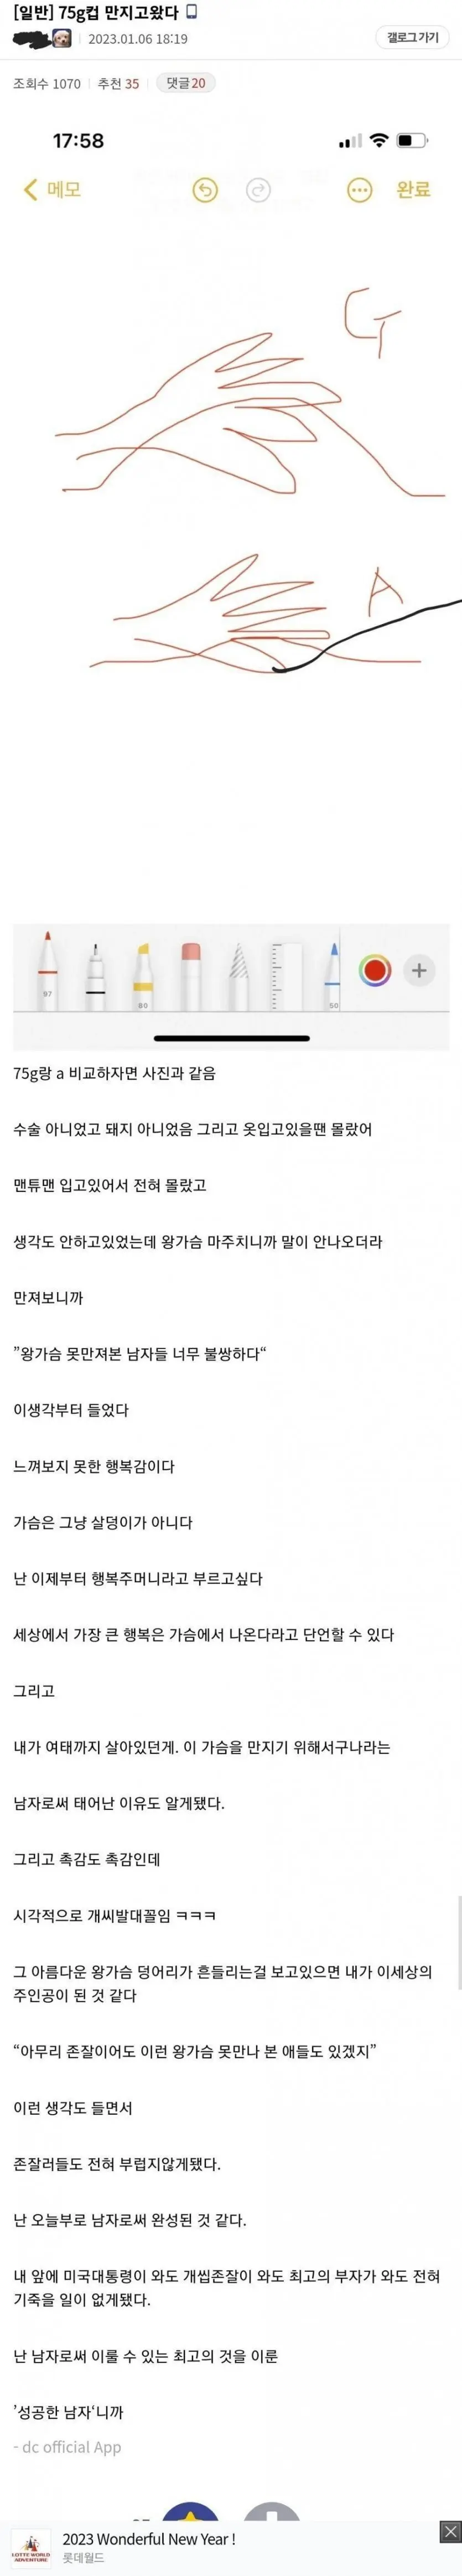 75G컵 가슴 큰 여자 만나본 후기.jpg | mbong.kr 엠봉